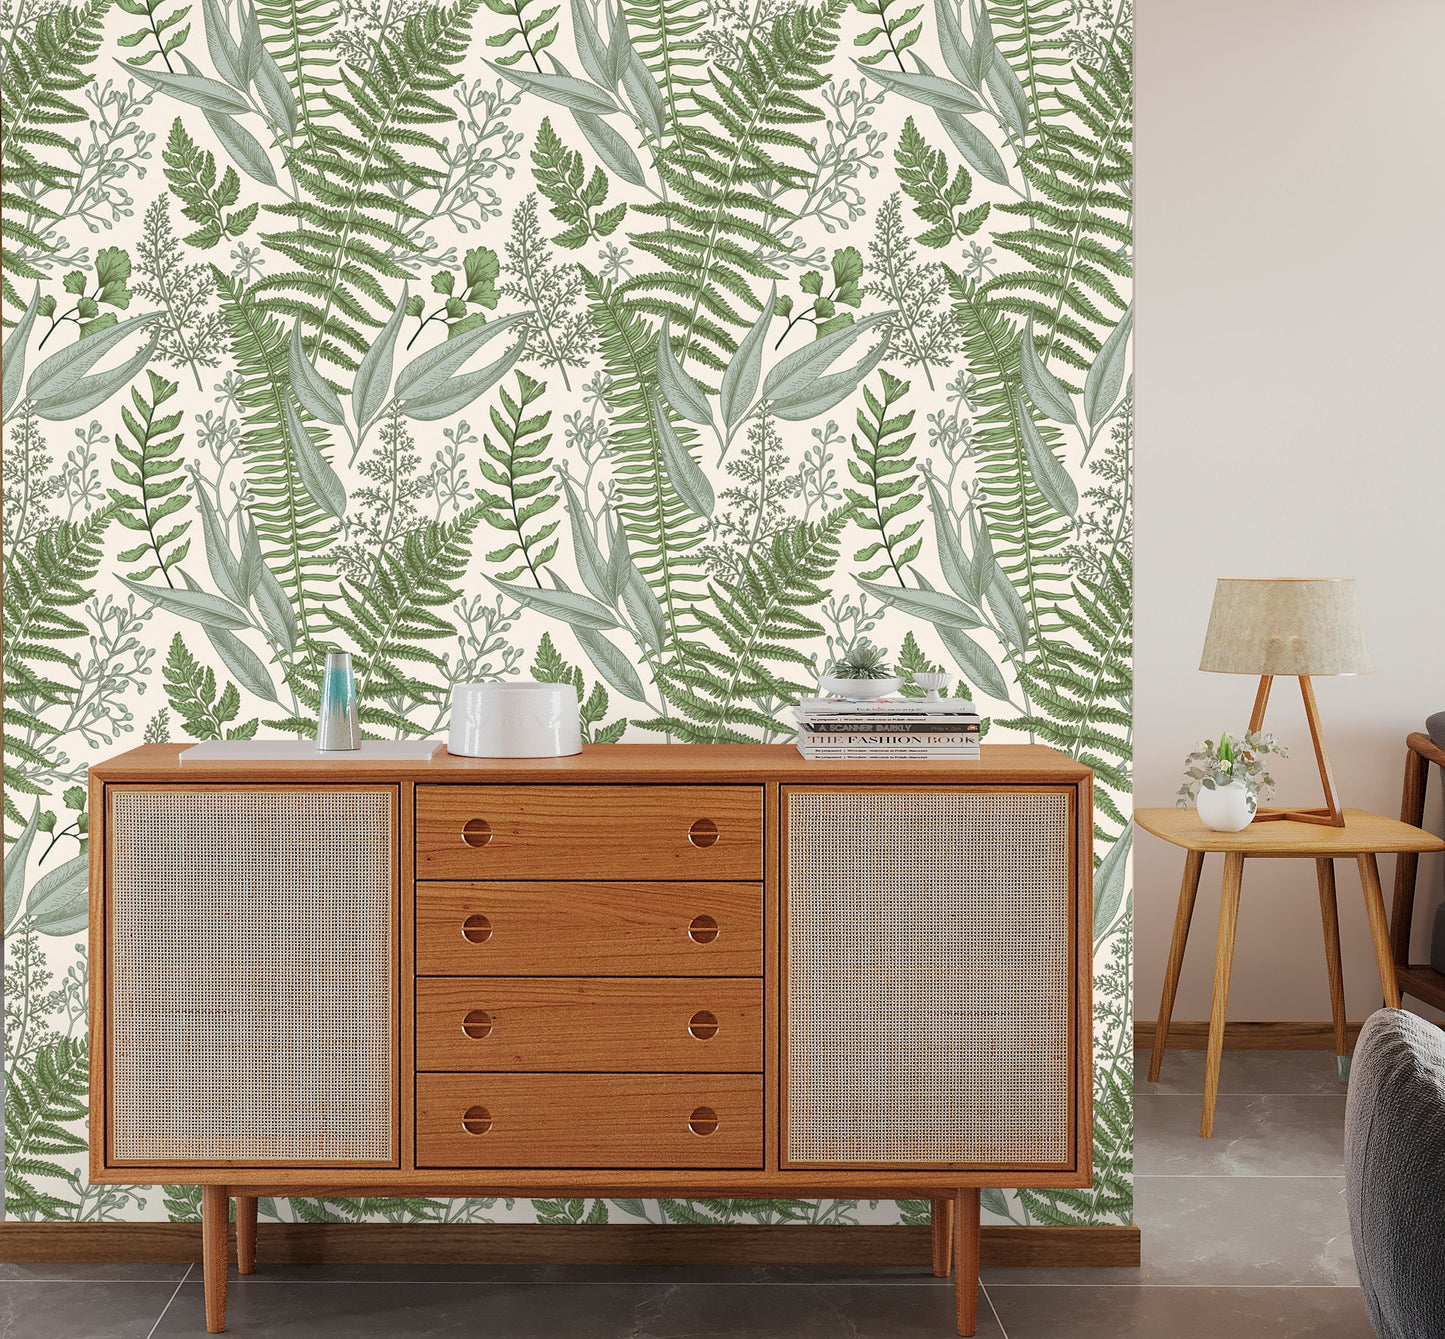 Fern Wallpaper, Green Leaf Wallpaper Peel and Stick, Botanical Wallpaper, Tropical Wallpaper, Removable Wall Paper